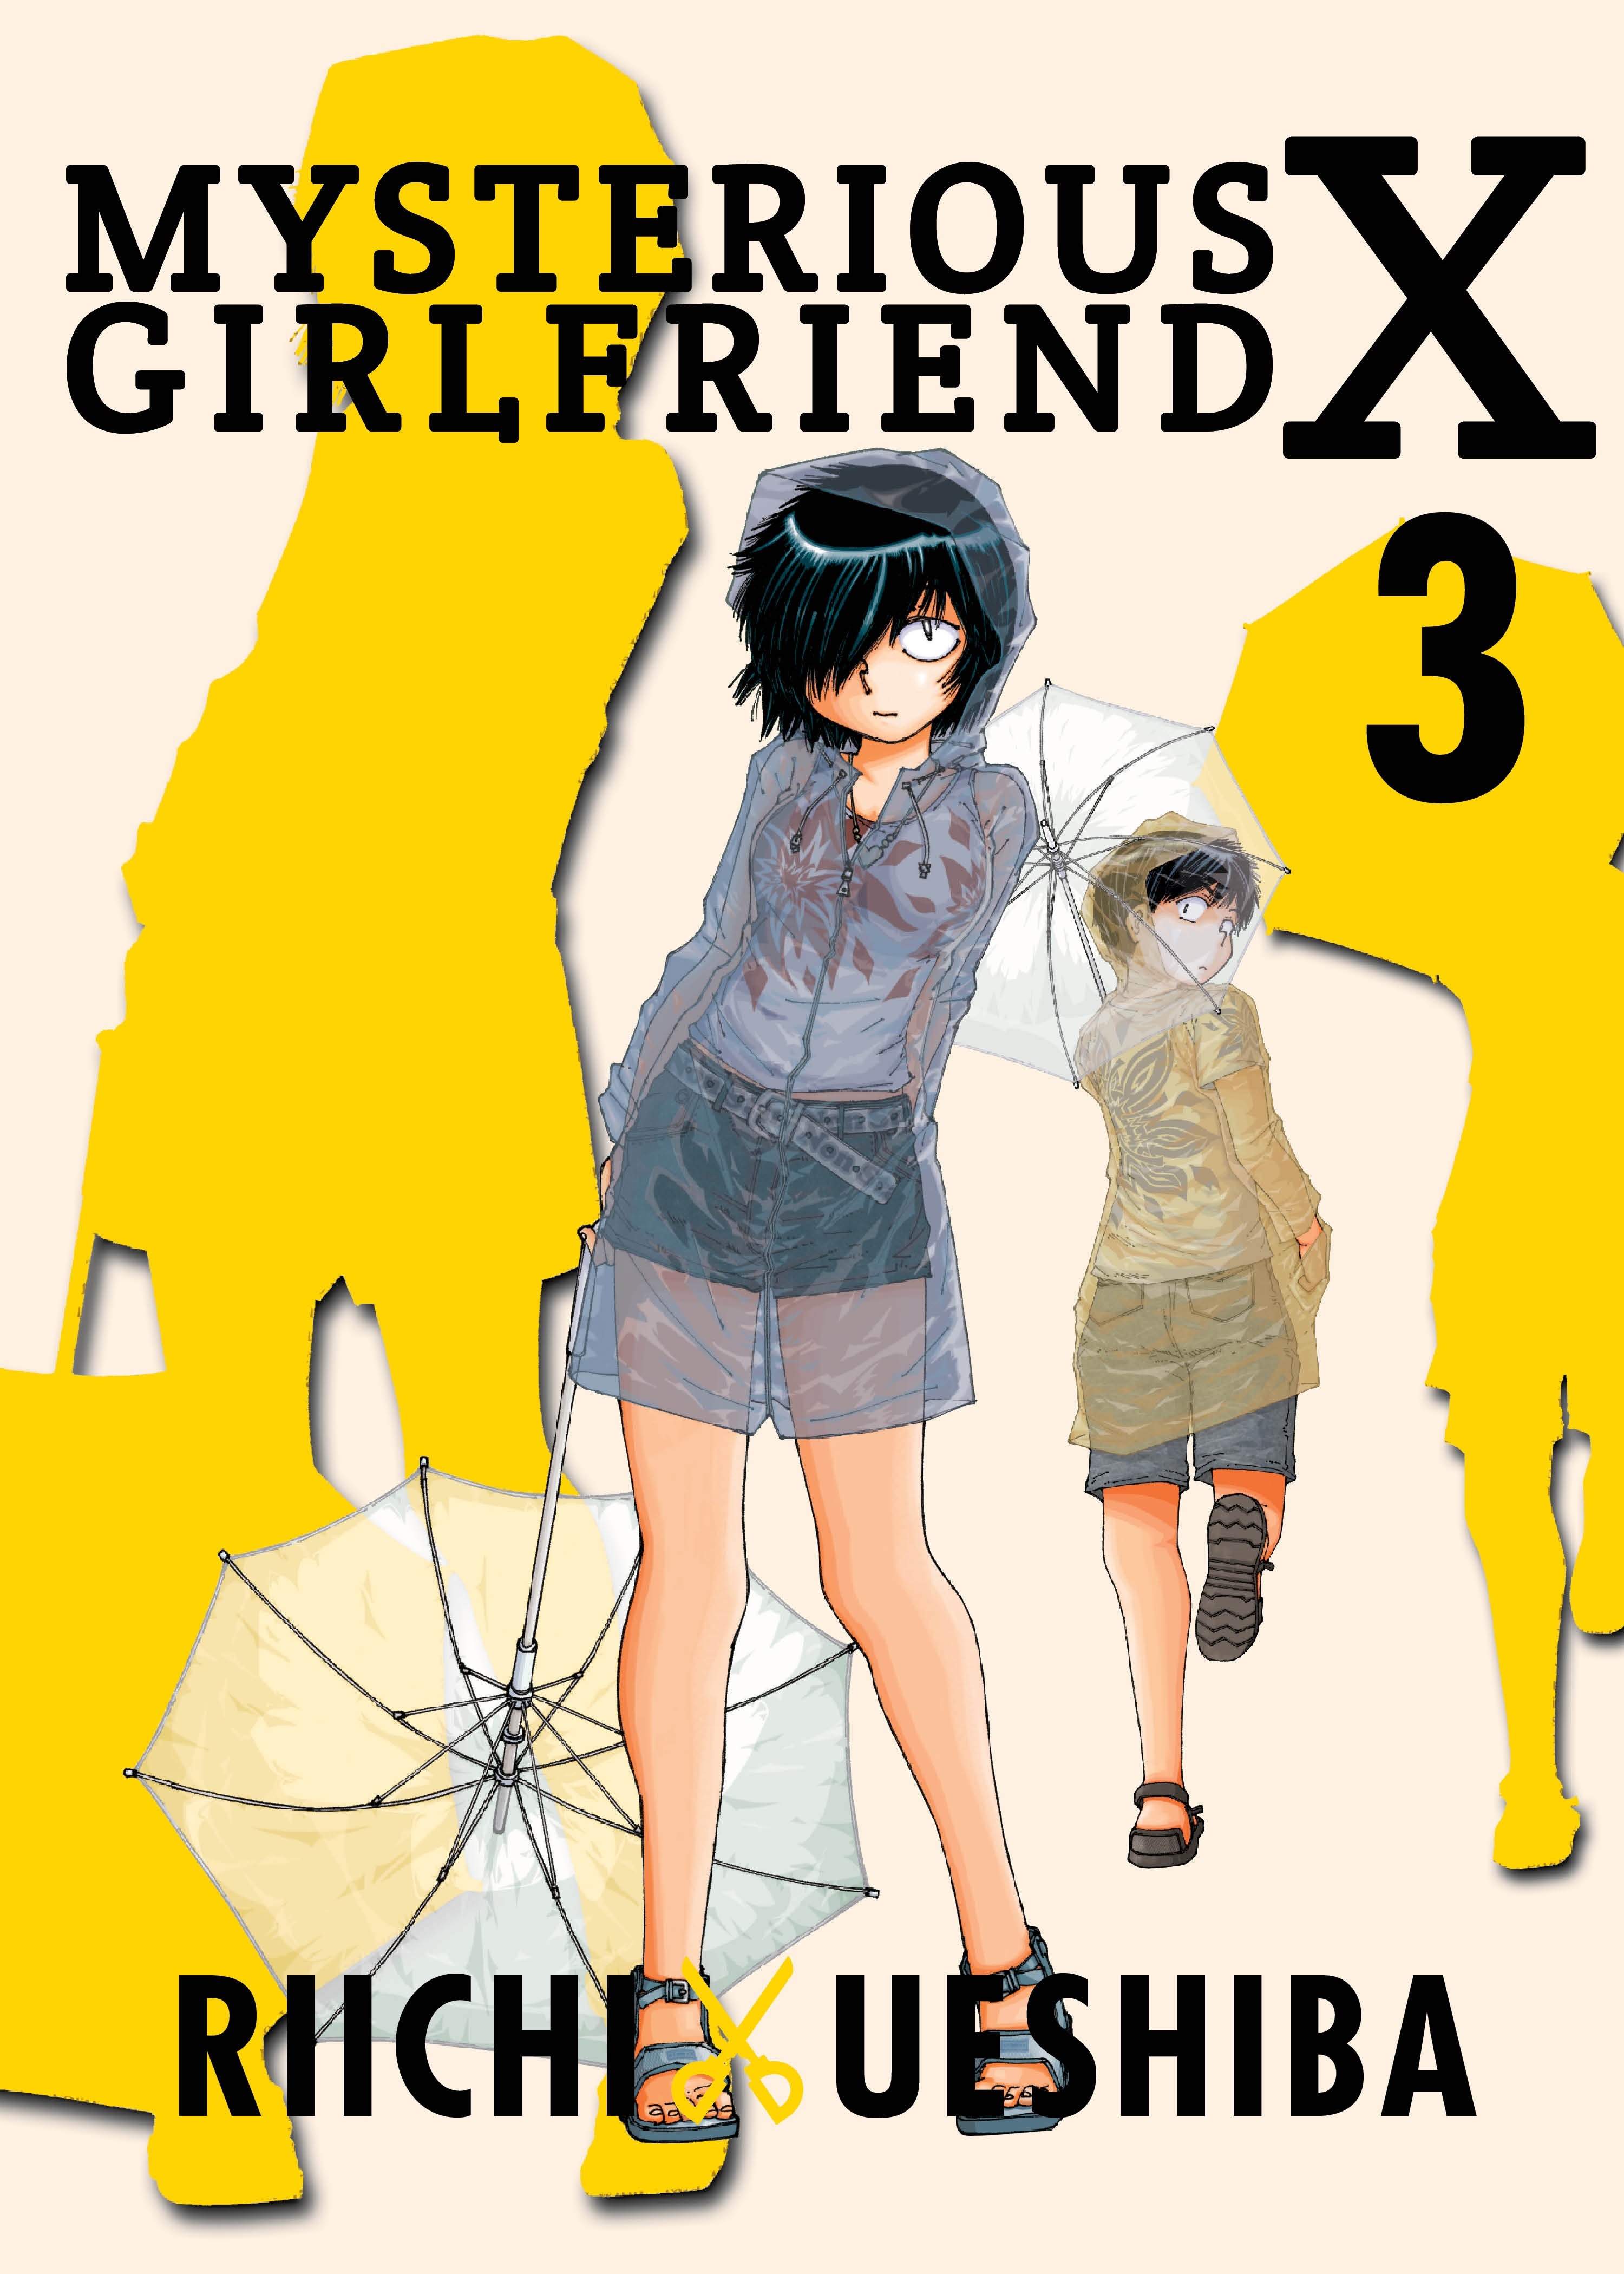 Mysterious Girlfriend X - Season 1 Episode 3